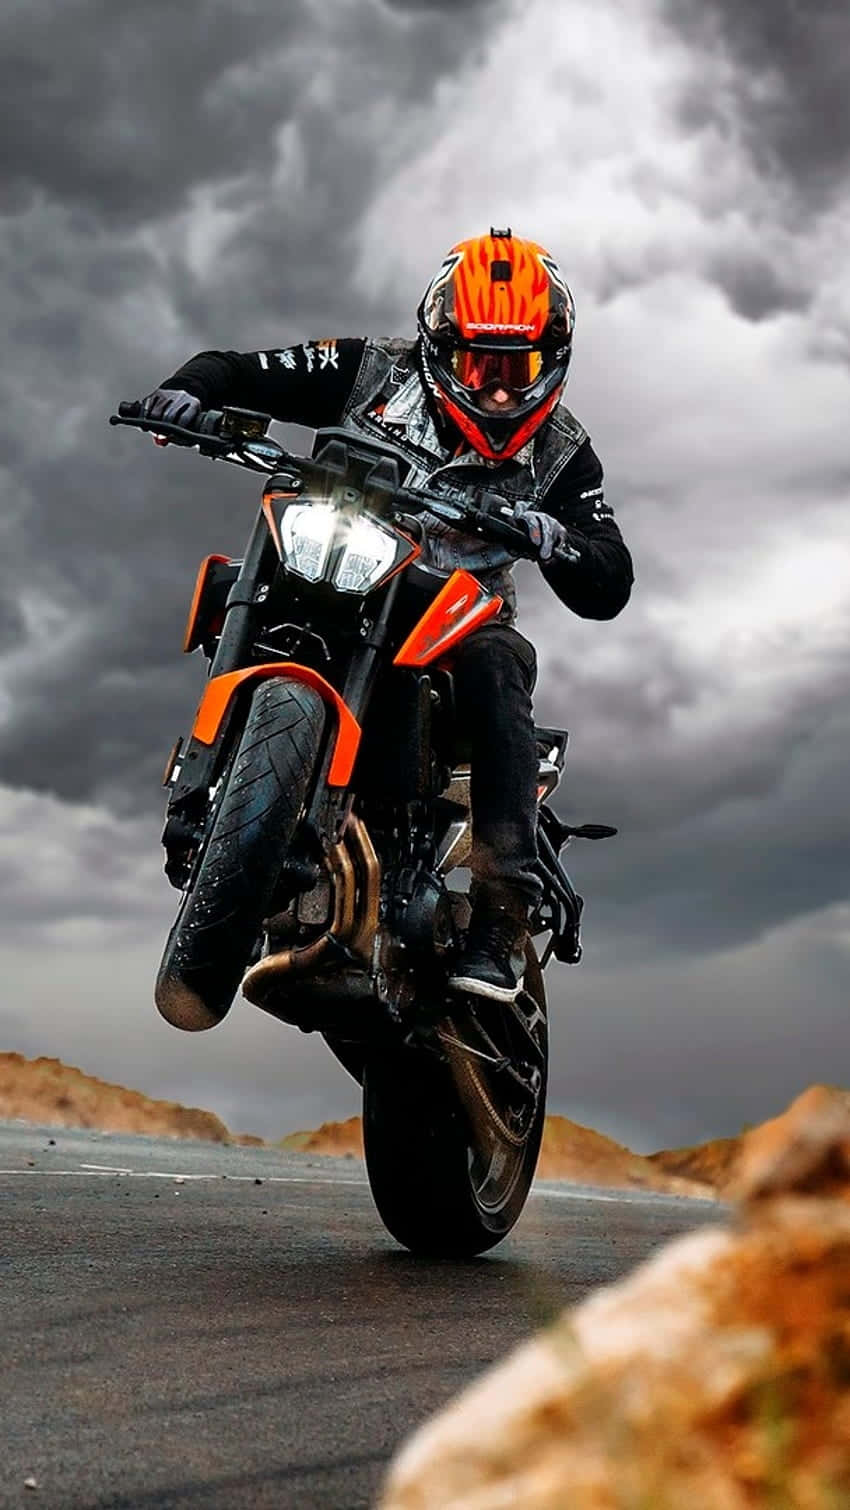 Stunning Shot Of Ktm Bike In Action Wallpaper